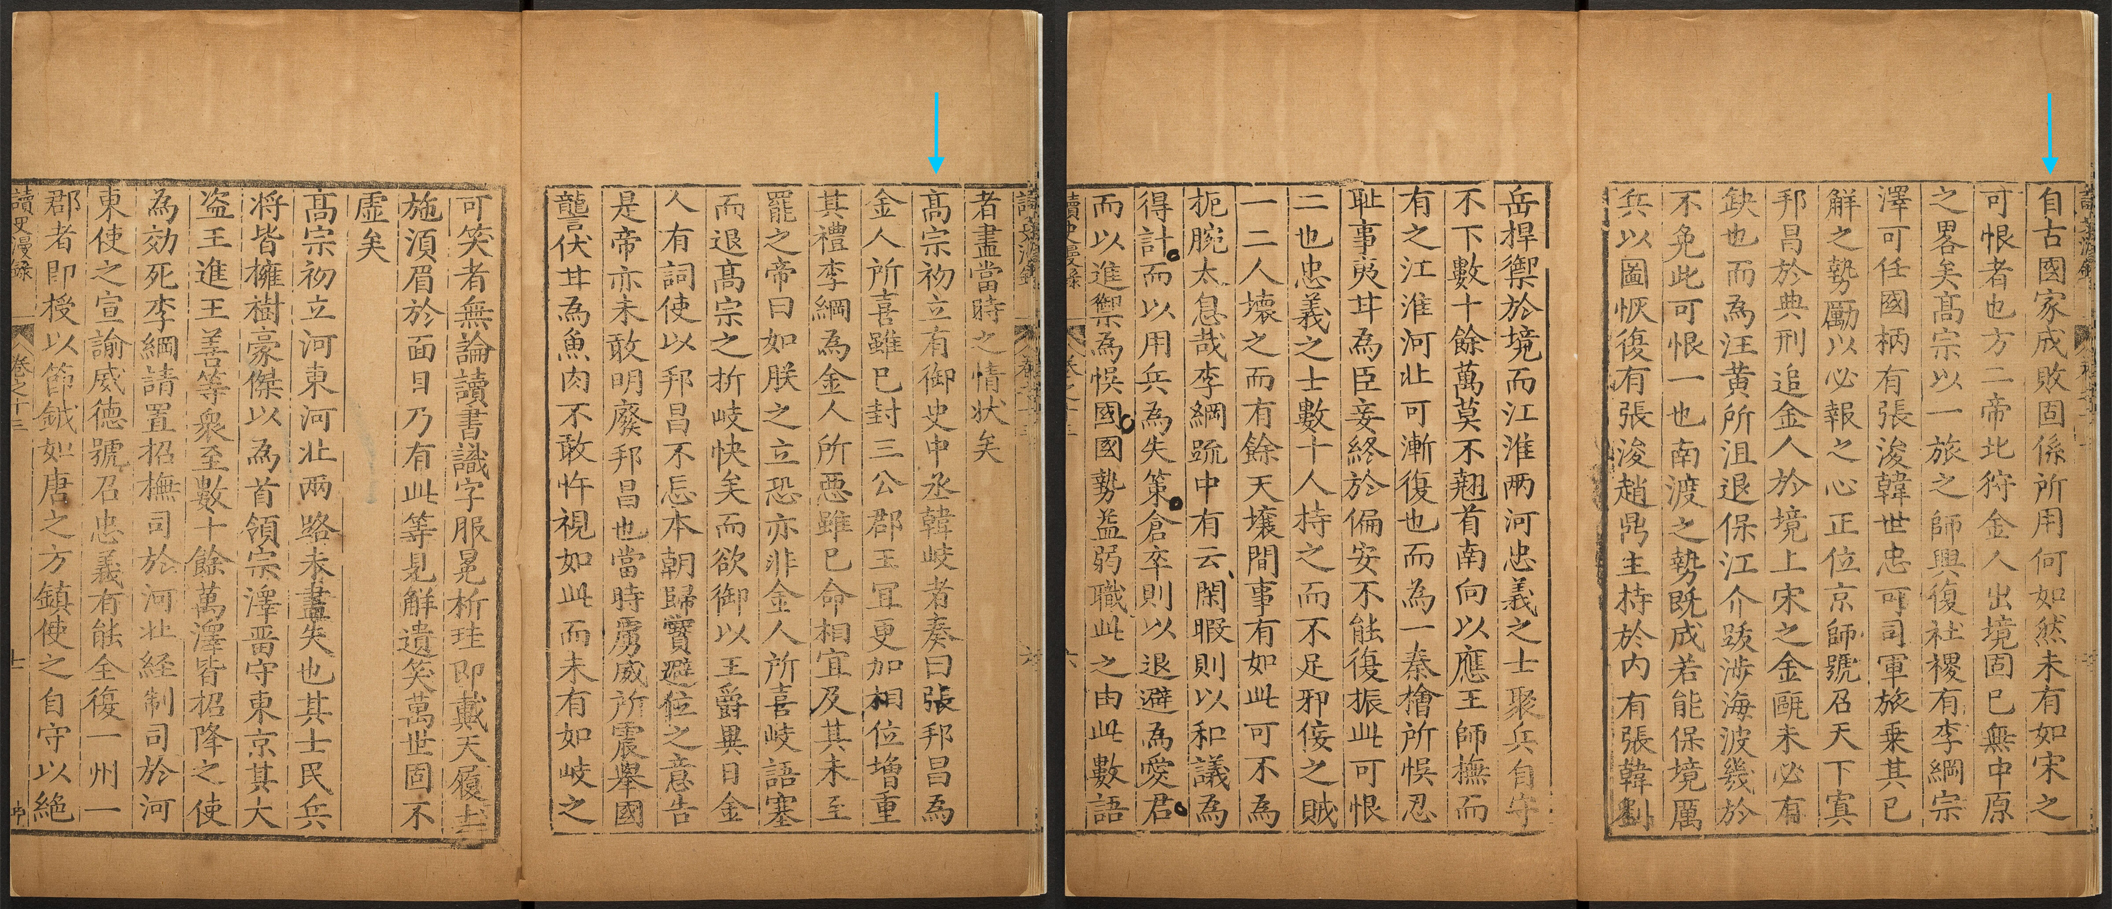 Image 3: “Complete Report of Studying History, late 16th or early 17th century”. - In: Yu Shenxing 于愼行 (1545–1608), Du shi man lu 讀史漫錄, juan 13, p. 5b–7a. - Retrieved from https://id.lib.harvard.edu/alma/990077598390203941/catalog [18.01.2024] (n.p.: Yu Wei 于緯, Ming Wanli jia yi n 明萬曆甲寅 [1614]), original held and scanned by Harvard University. - A reprint of a different edition can be found in SBB in Siku quanshu cunmu congshu 四庫全書存目叢書 (Jinan: Qi Lu shushe, 1996), “Shibu” 史部, “Shiping lei” 史評類, vol. 285, p. 654 (juan 13, p. 4a–5b), SBB PK: 5 B 33301 285